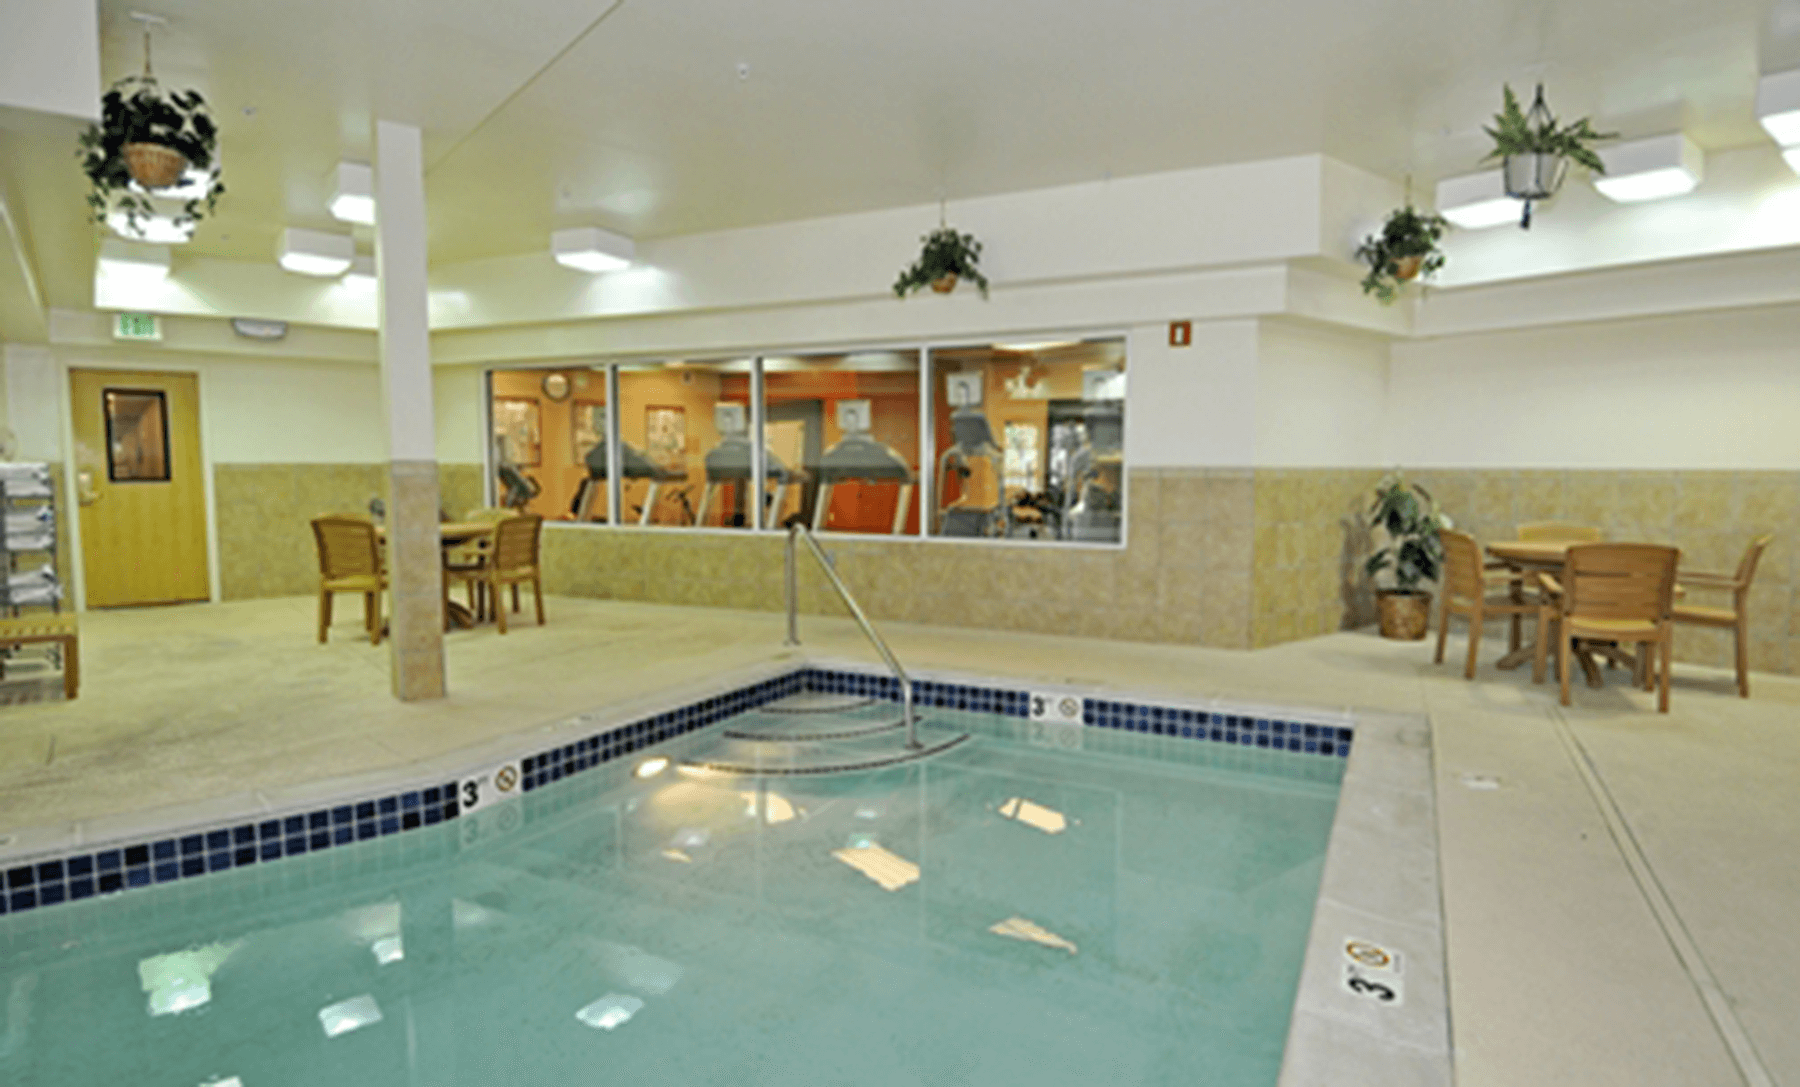  Homewood Suites indoor pool 